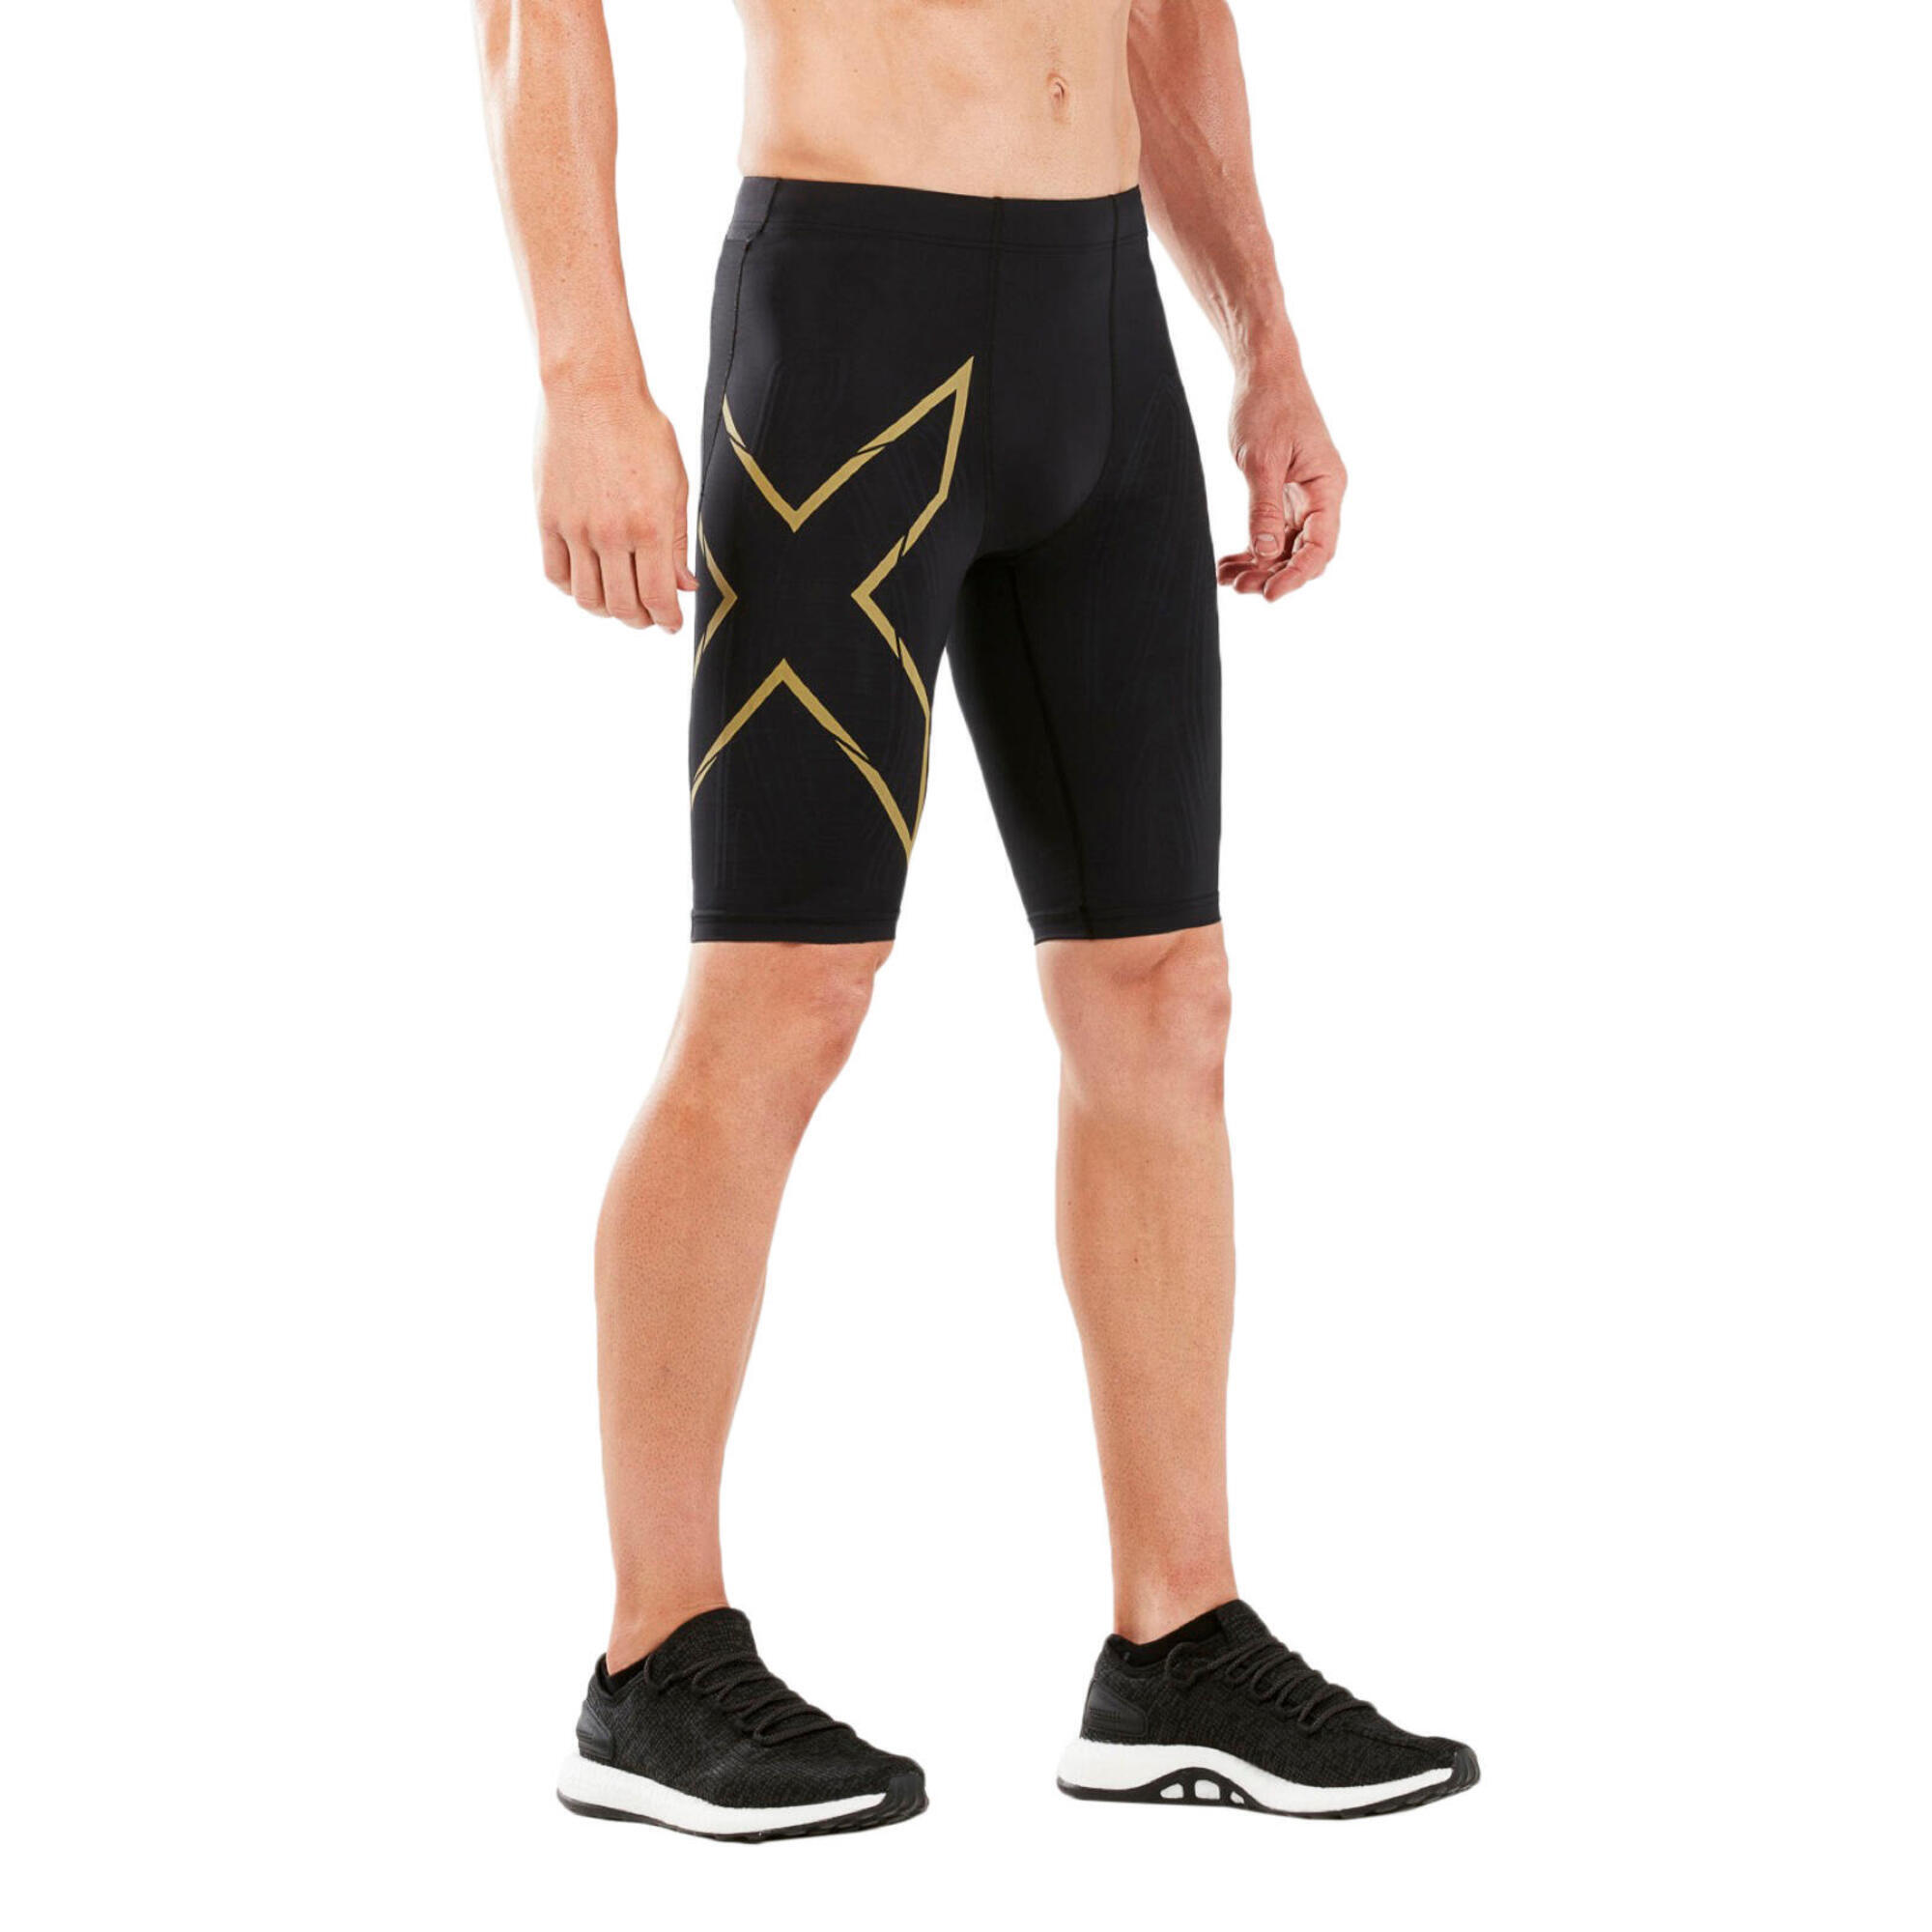 2XU 2XU Men's Light Speed Compression Shorts - Black/ Gold